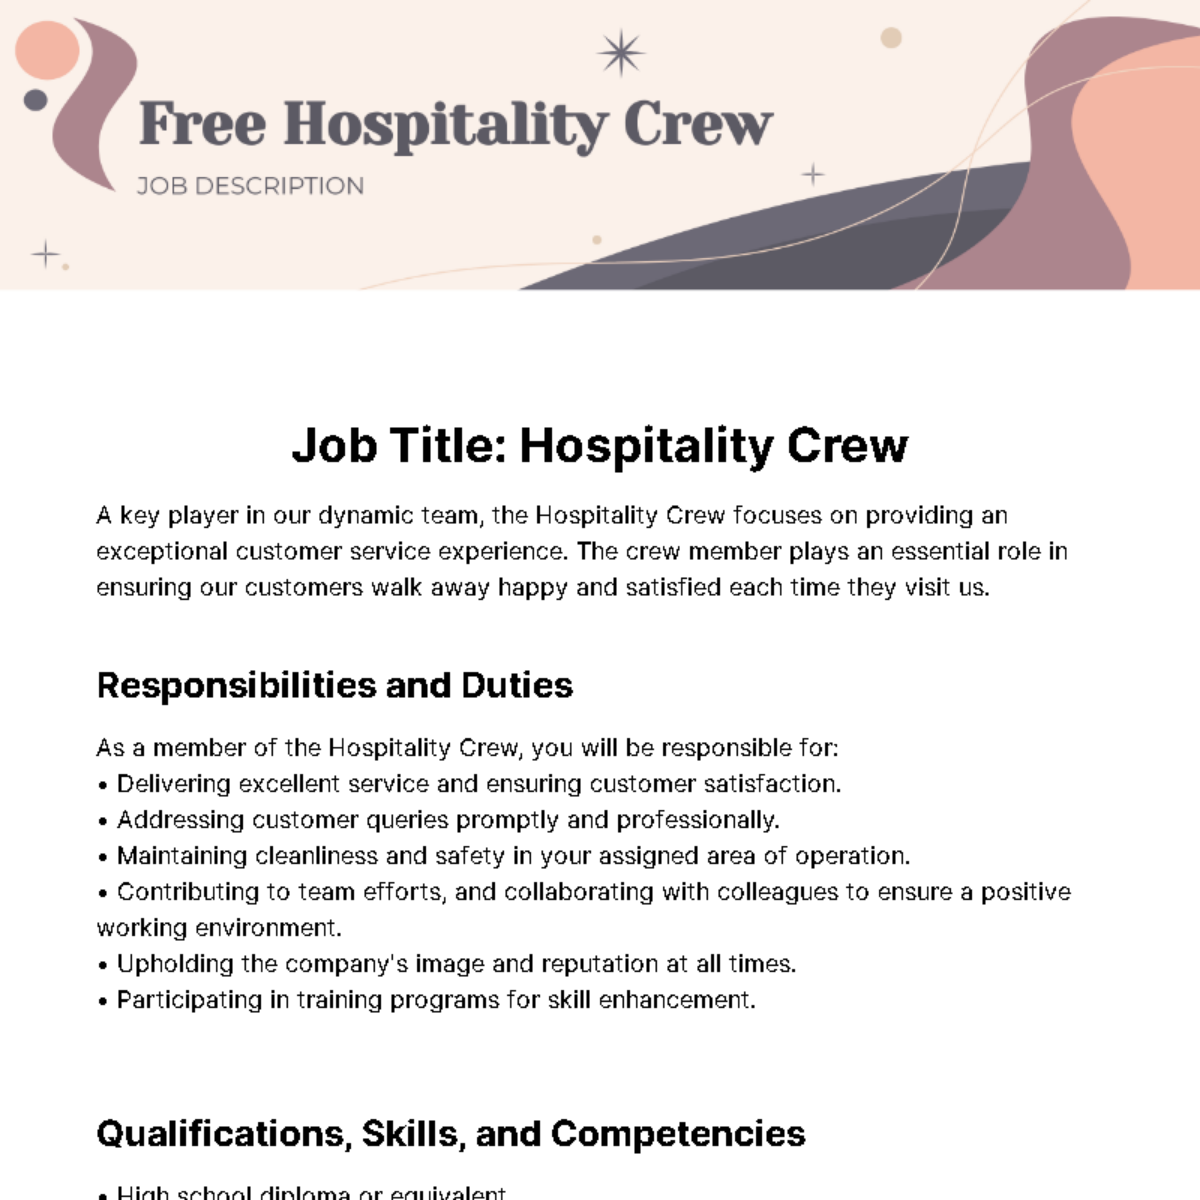 Free Hospitality Crew Job Description Template